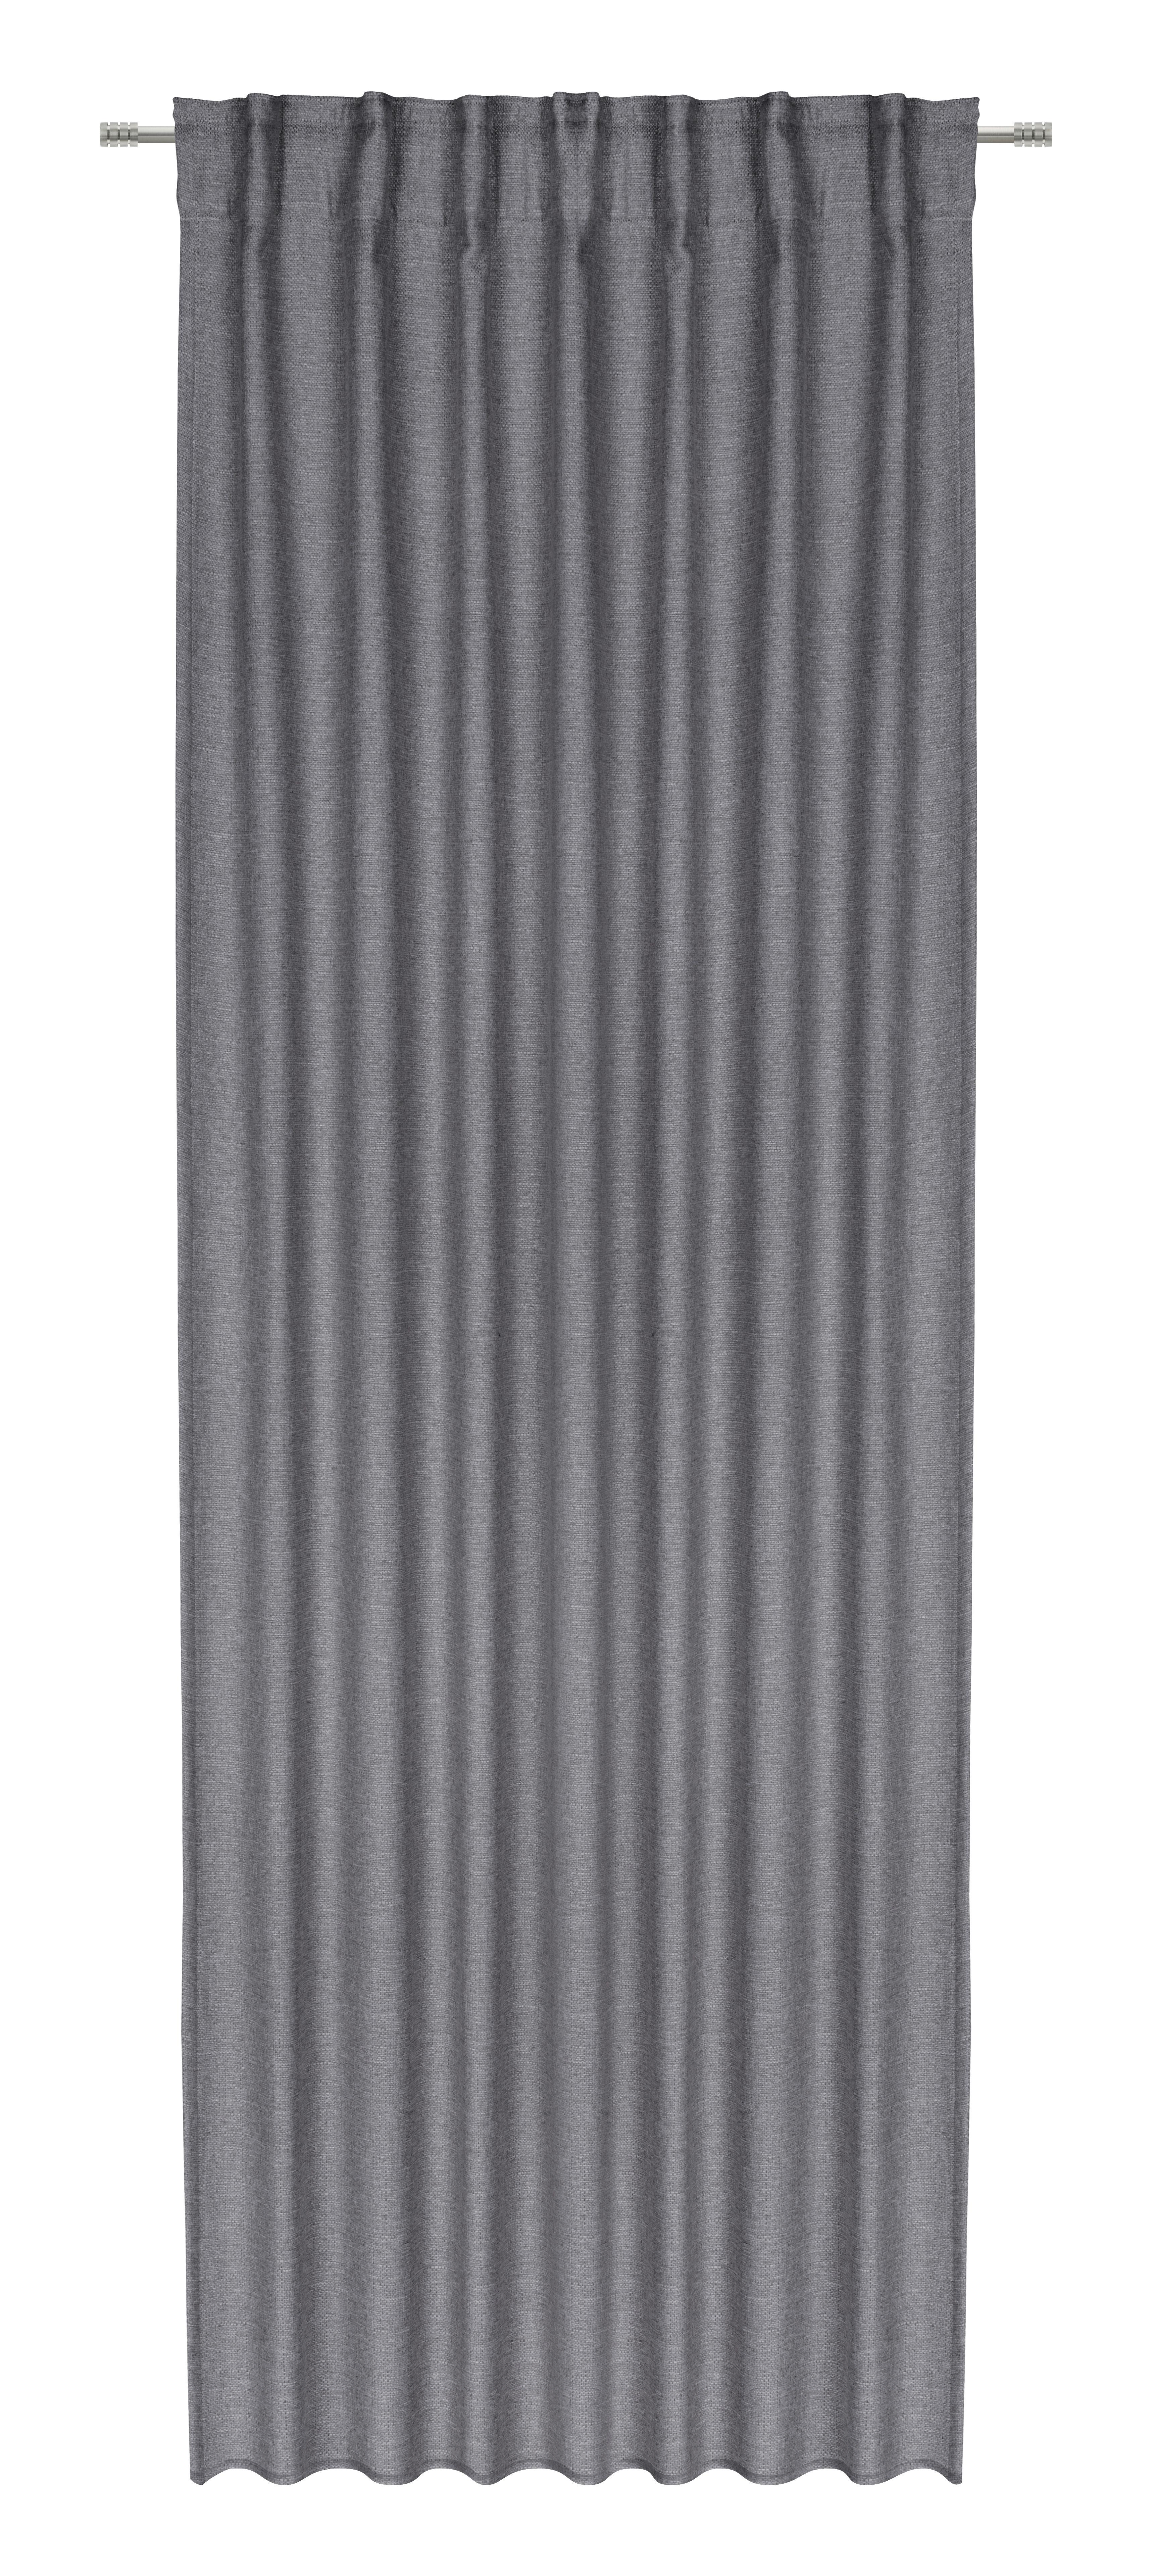 Gotova Zavjesa Alfi 135/255cm - antracit, Konventionell, tekstil (135/255cm) - Modern Living